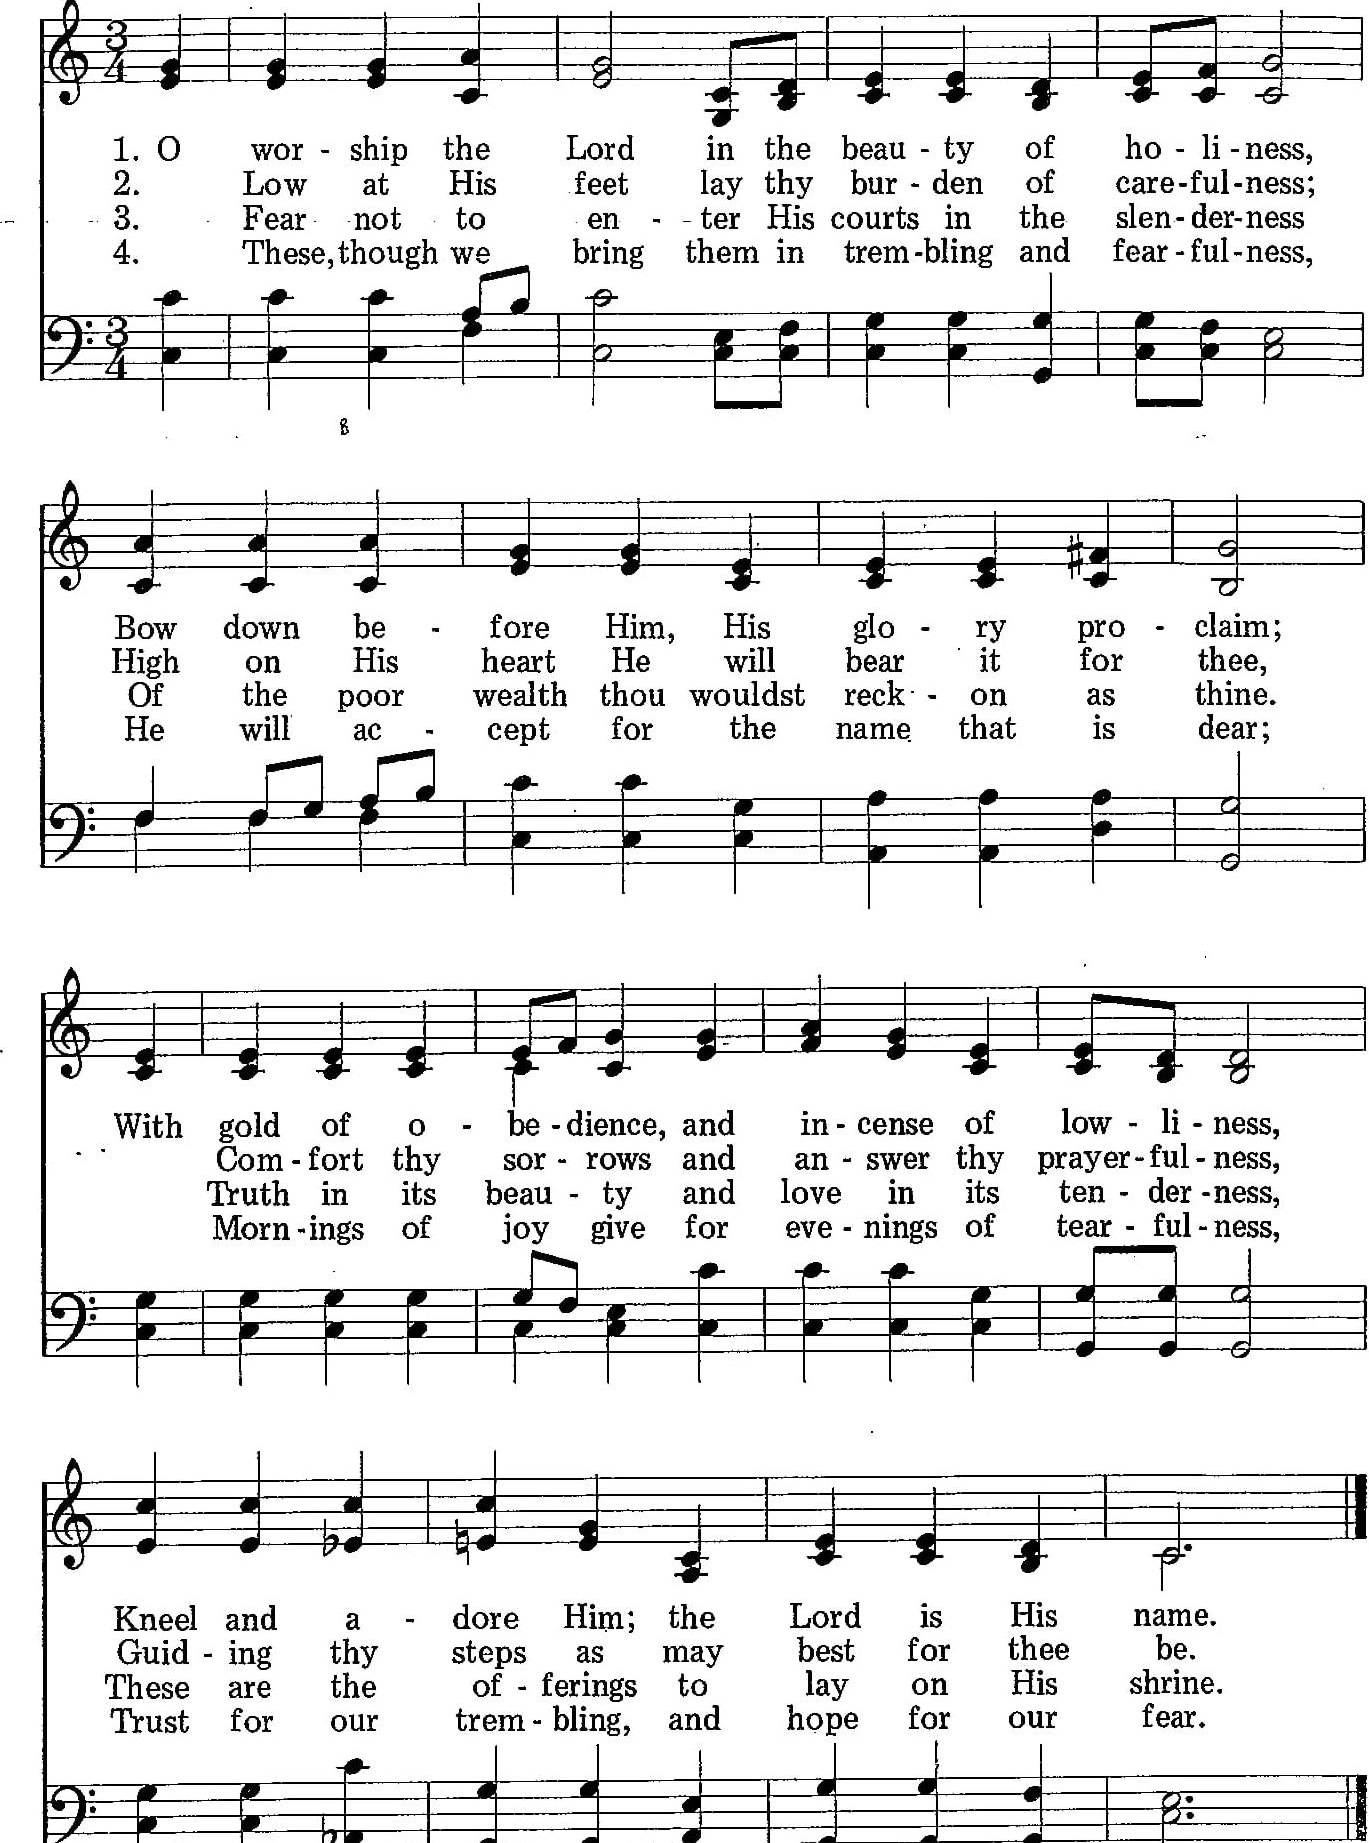 006 – O Worship the Lord sheet music